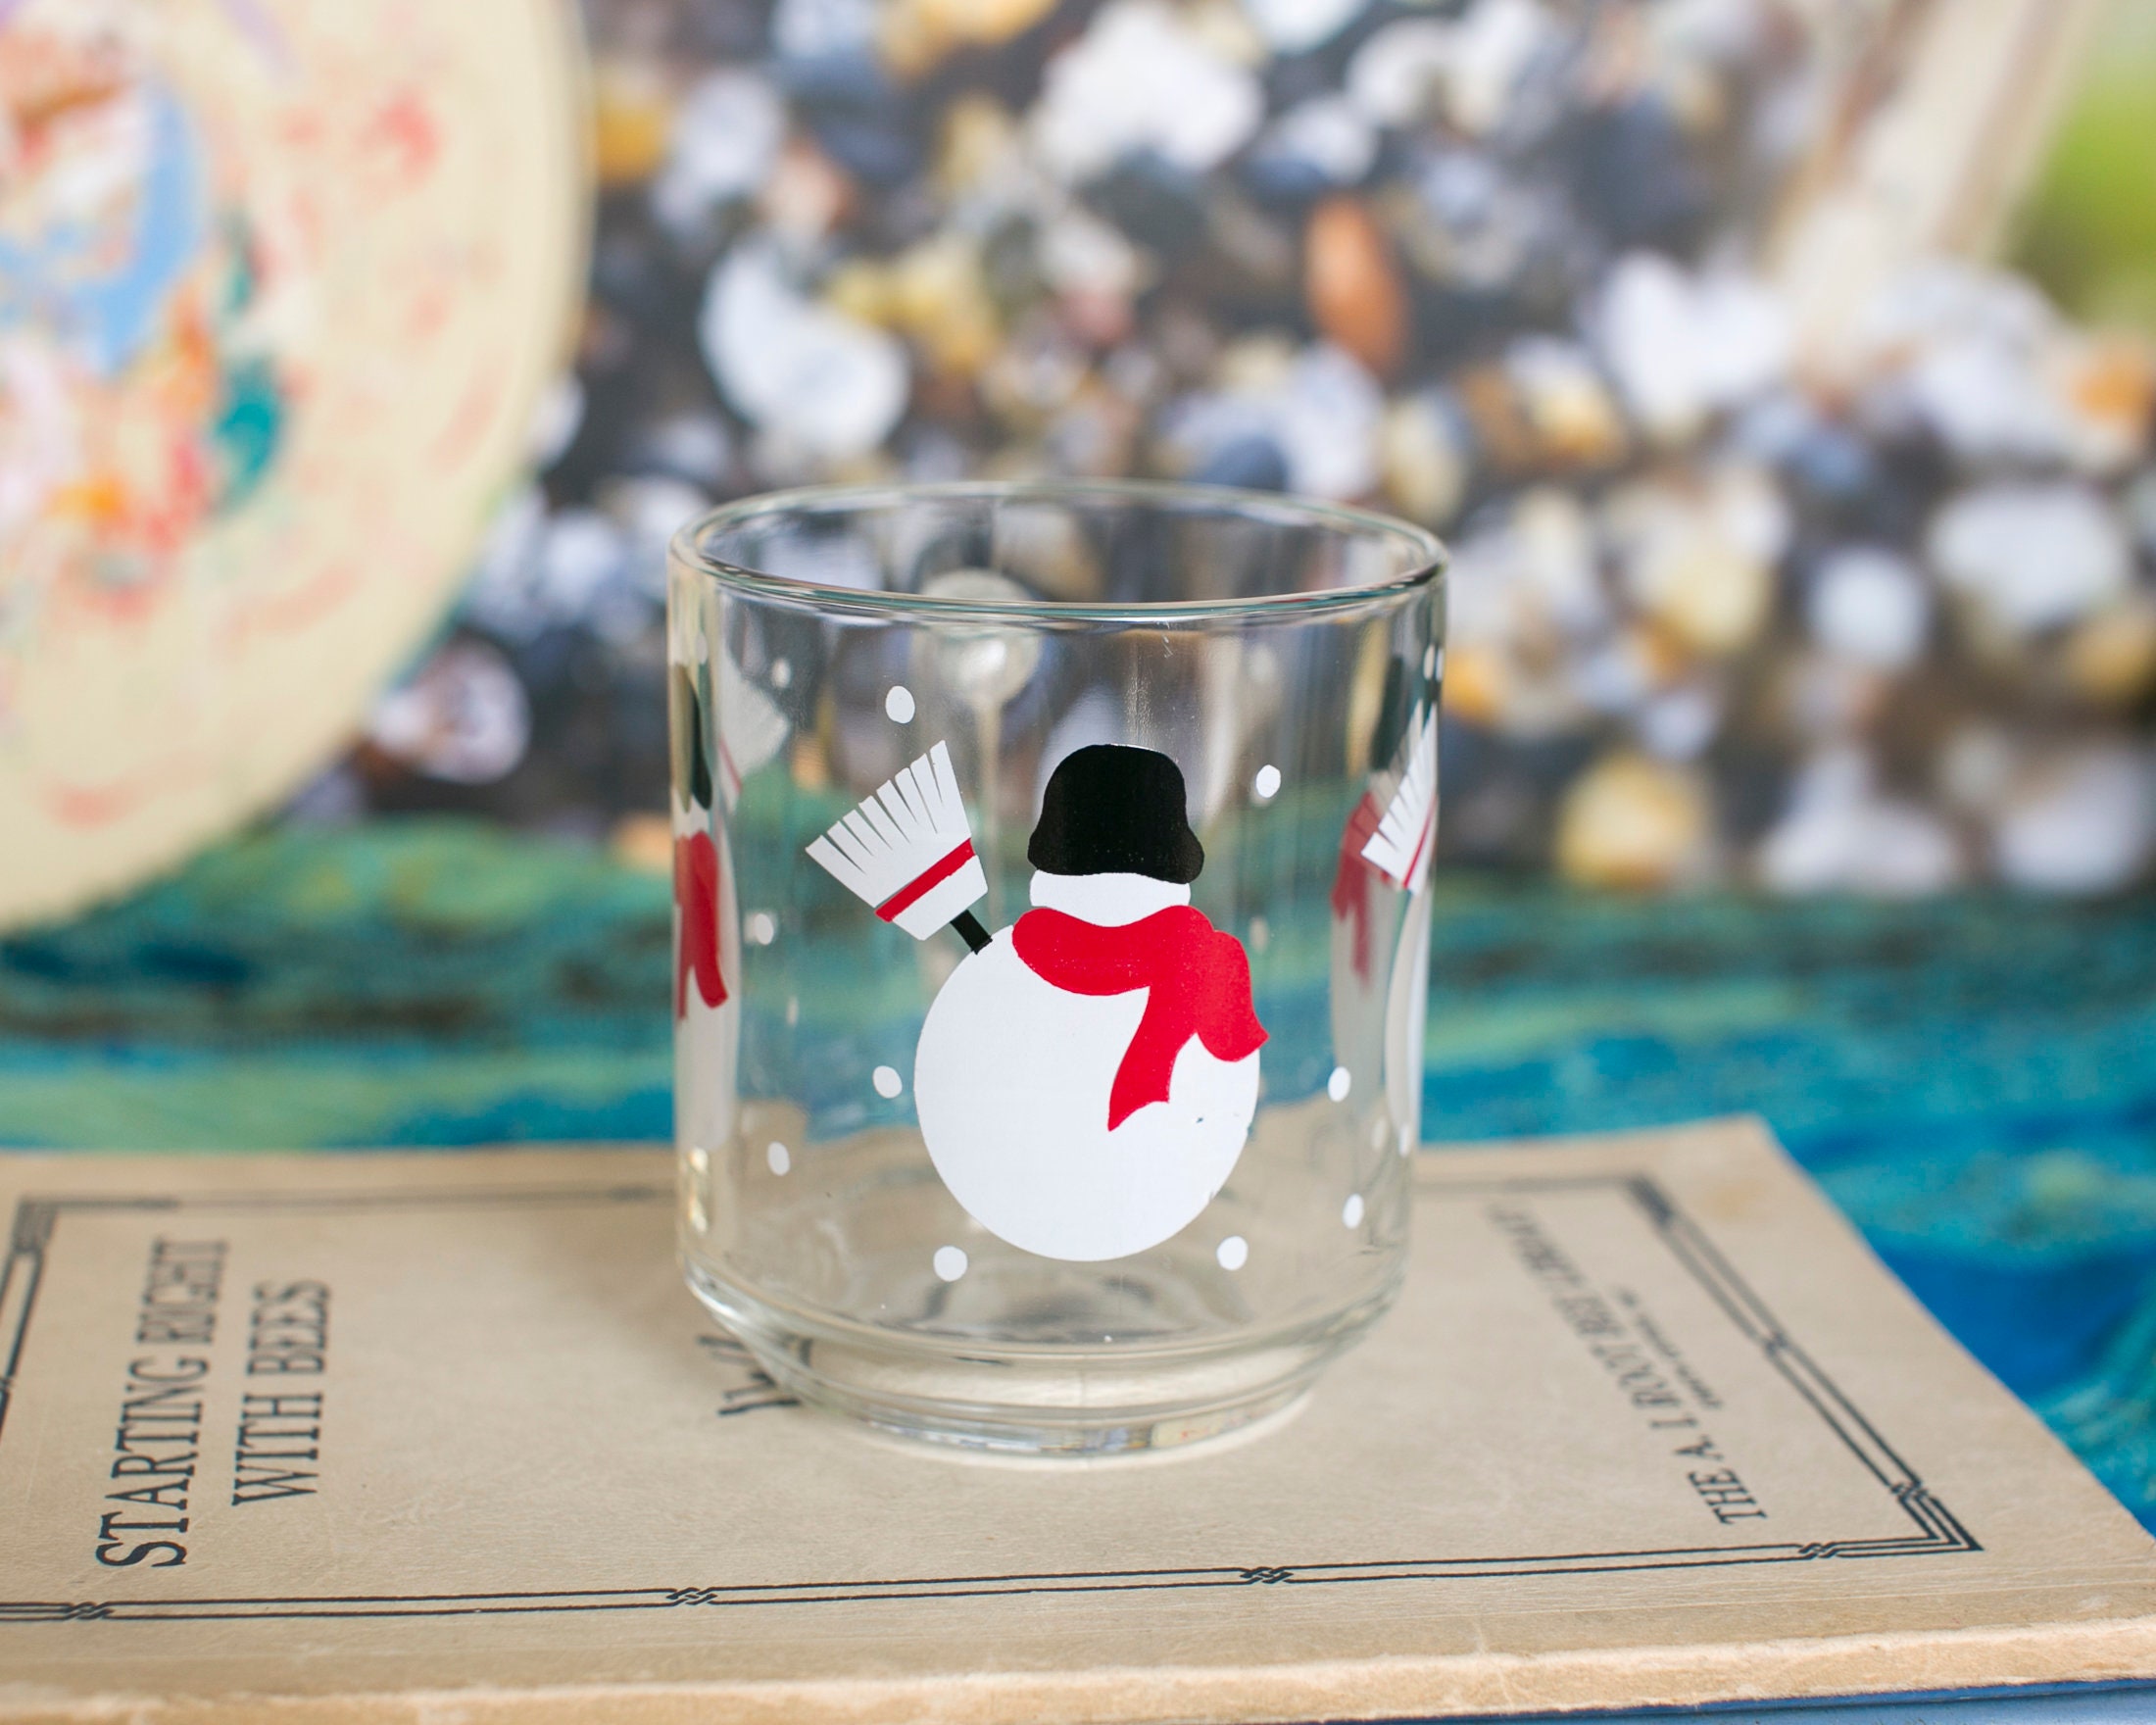 Christmas Glass Coffee Mug With Lid And Spoon, Cute Clear Glass